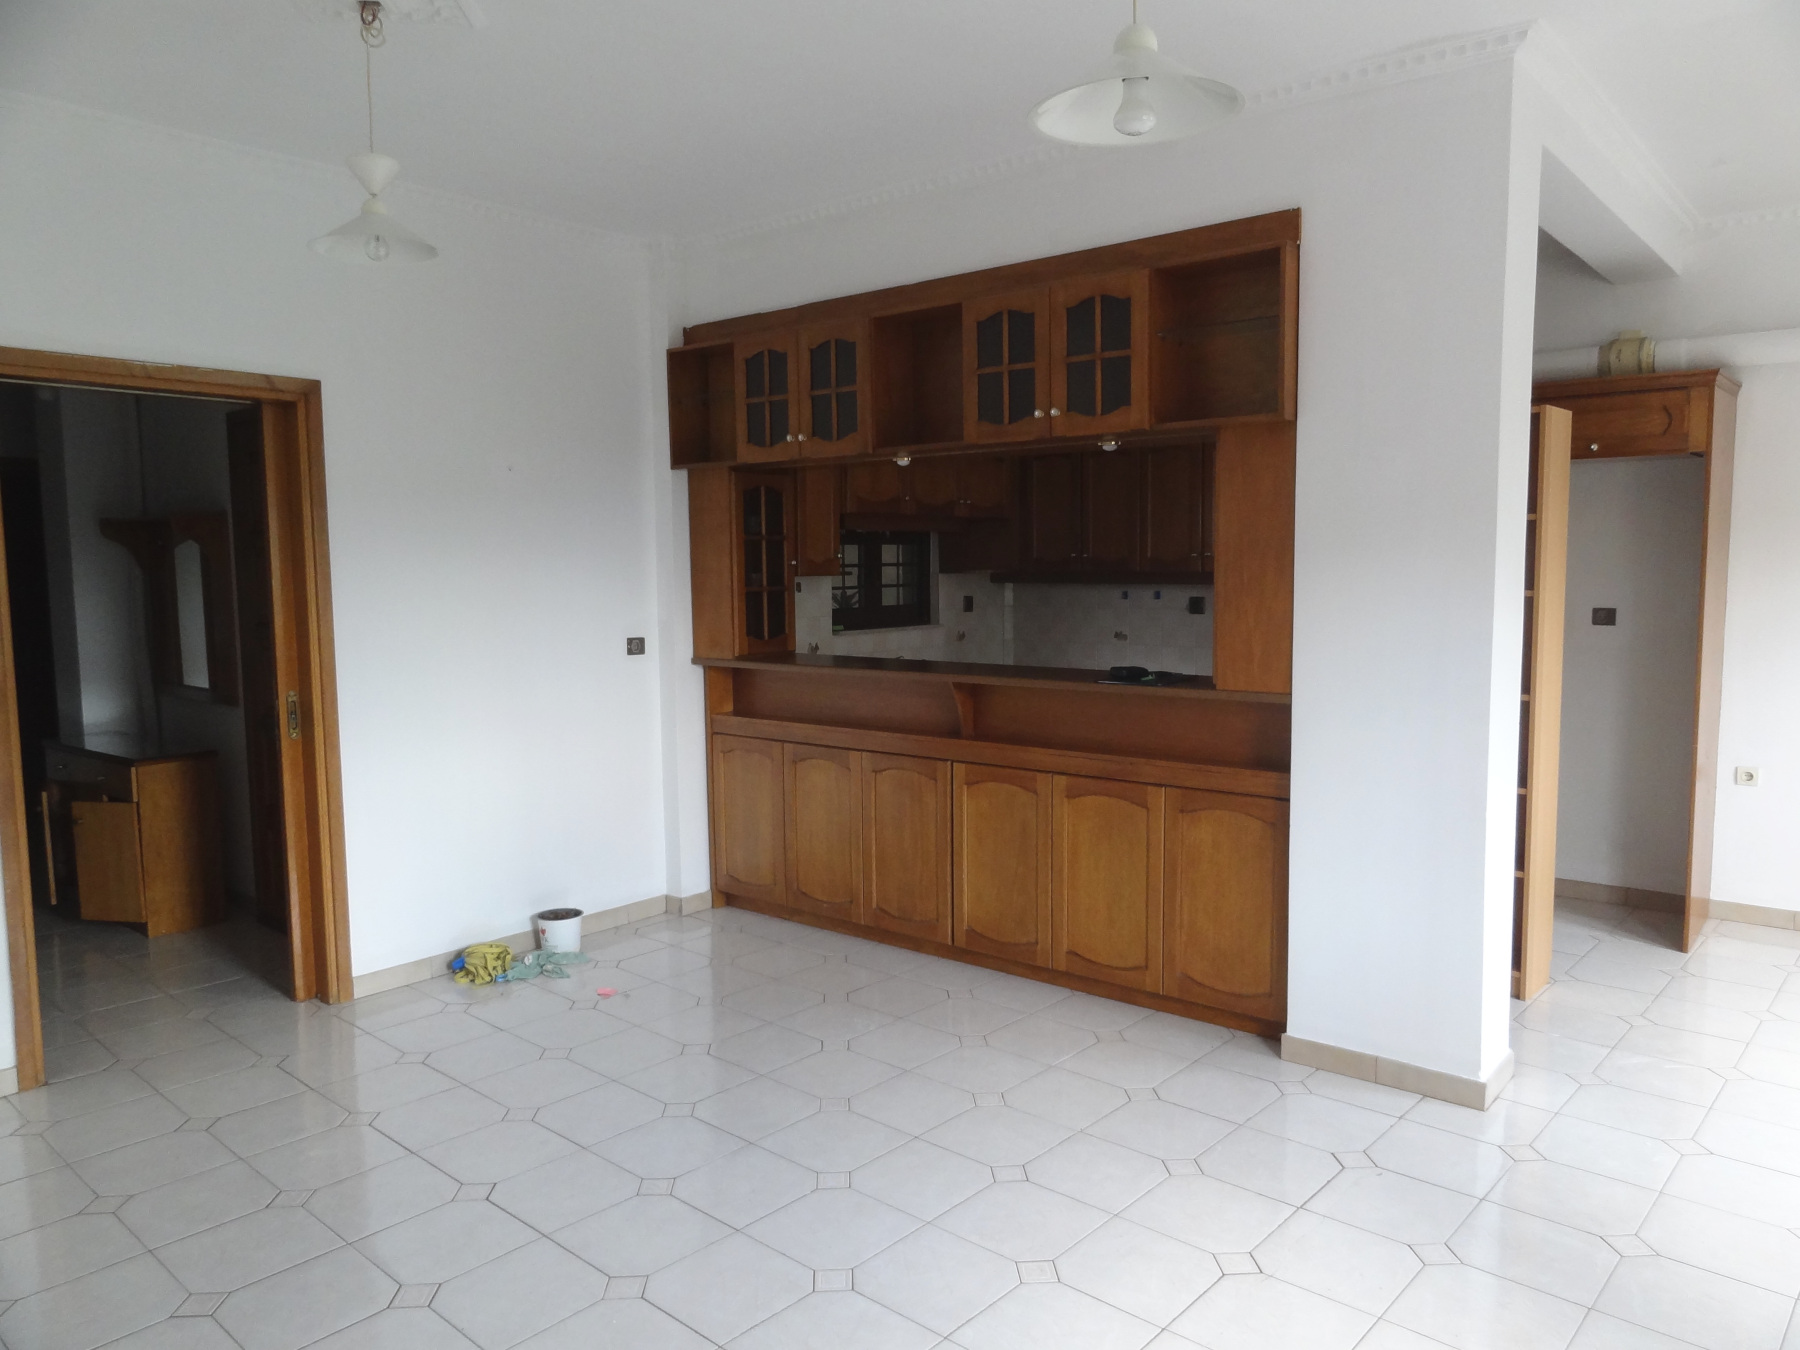 For rent 2 bedrooms bright apartment of 85 sq.m. 1st floor in Kiafa, Ioannina near the school complex